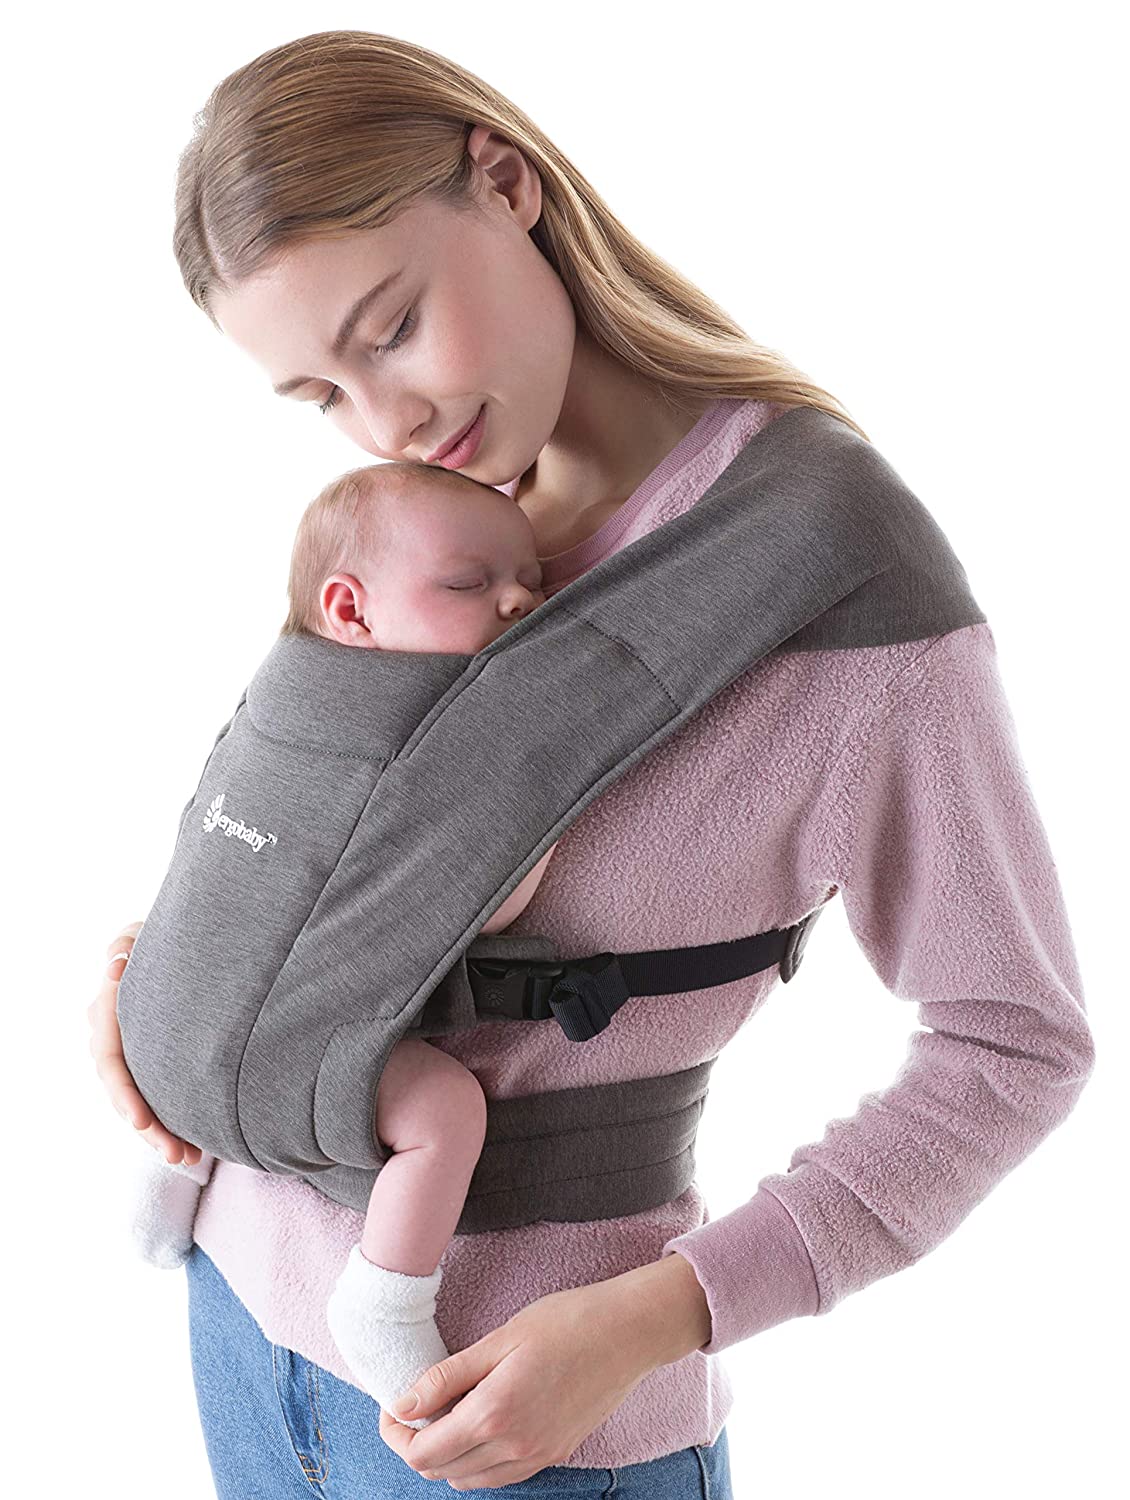 Ergobaby baby carrier for newborns from birth extra soft, Embrace front carrier baby carrier bag ergonomic (Heather Grey)